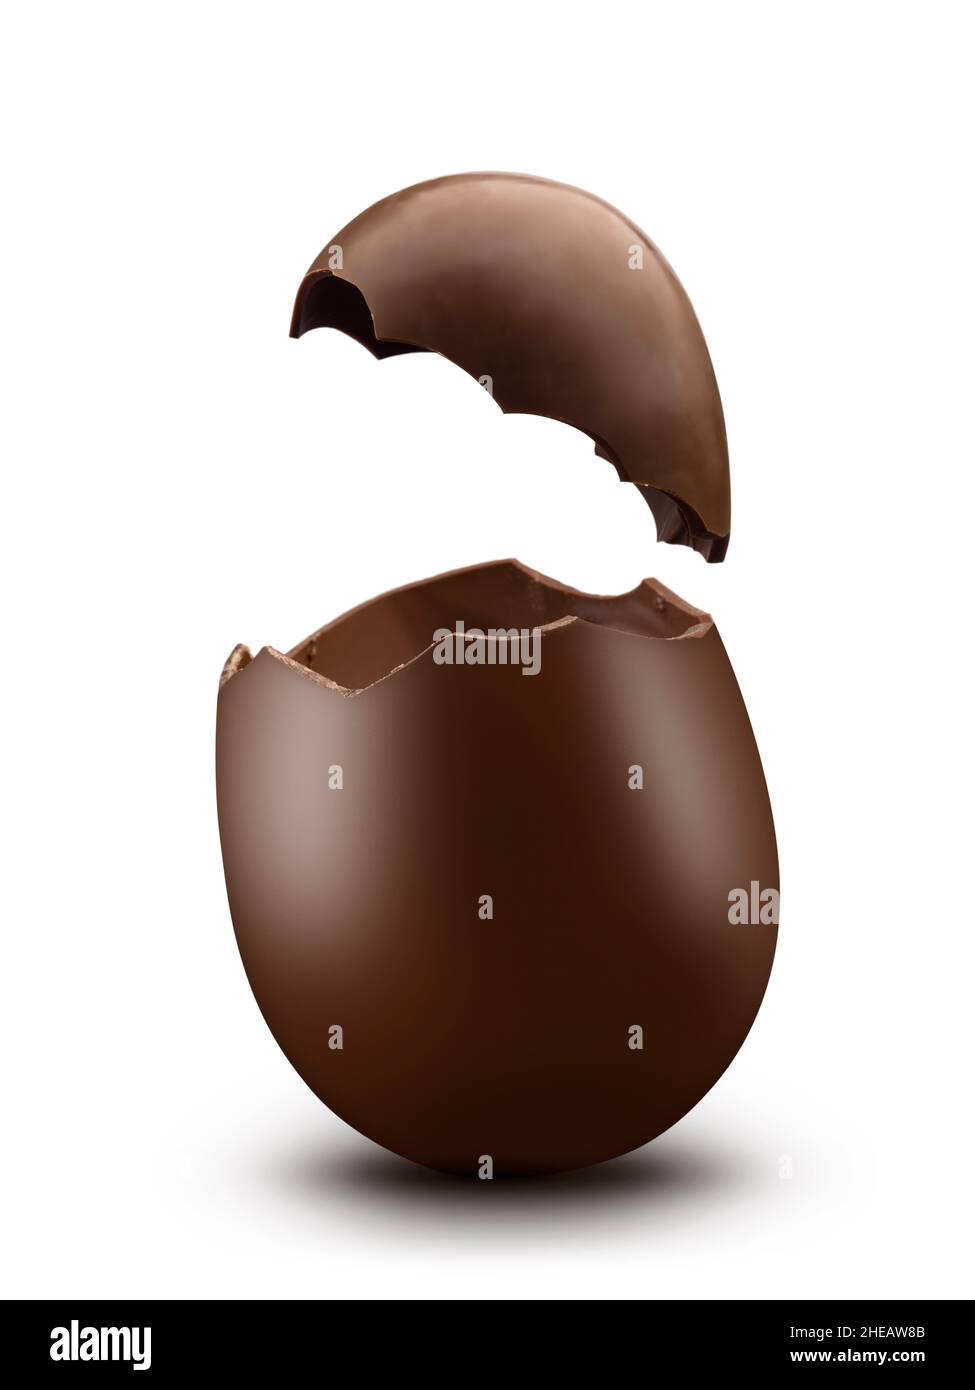 Easter Chocolate BrokenEgg Clip Art Image​